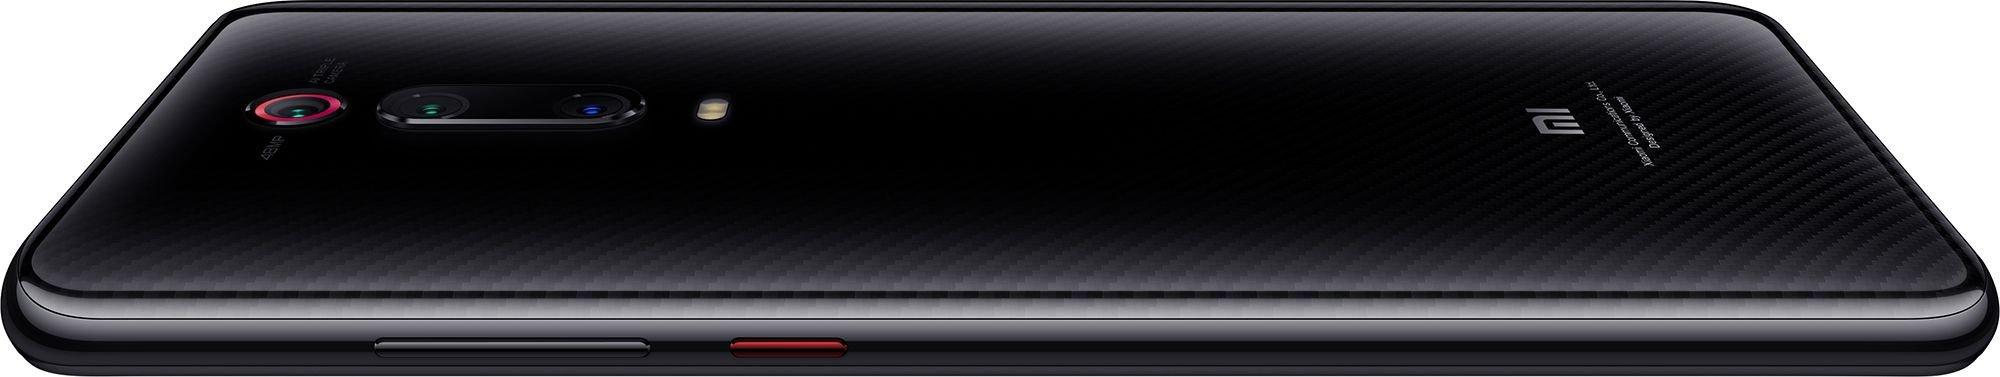 Смартфон Xiaomi Mi 9T (Redmi K20) 6/128Gb Carbon Black заказать